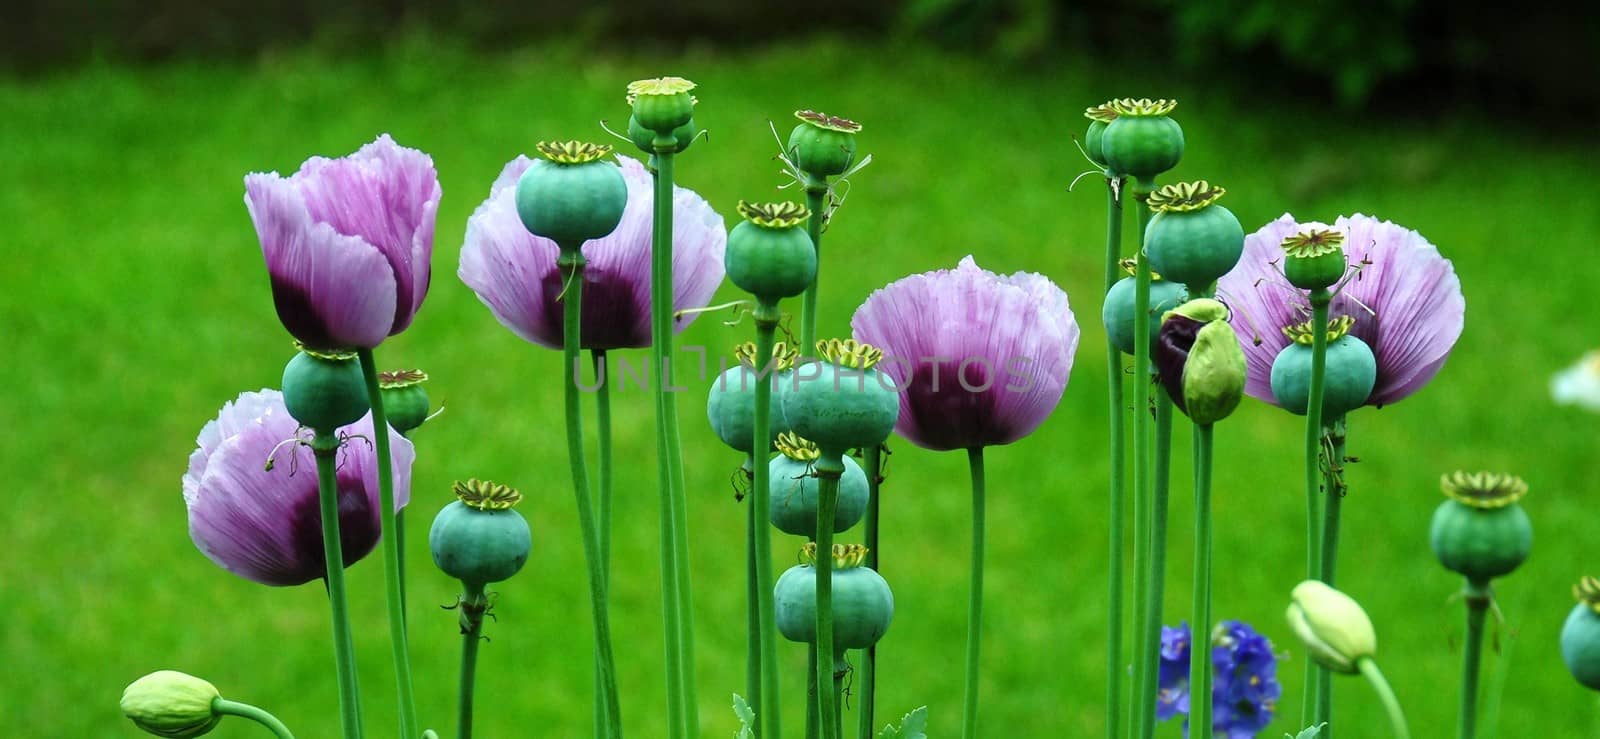 Poppy flowers in a Cottage garden. by george_stevenson